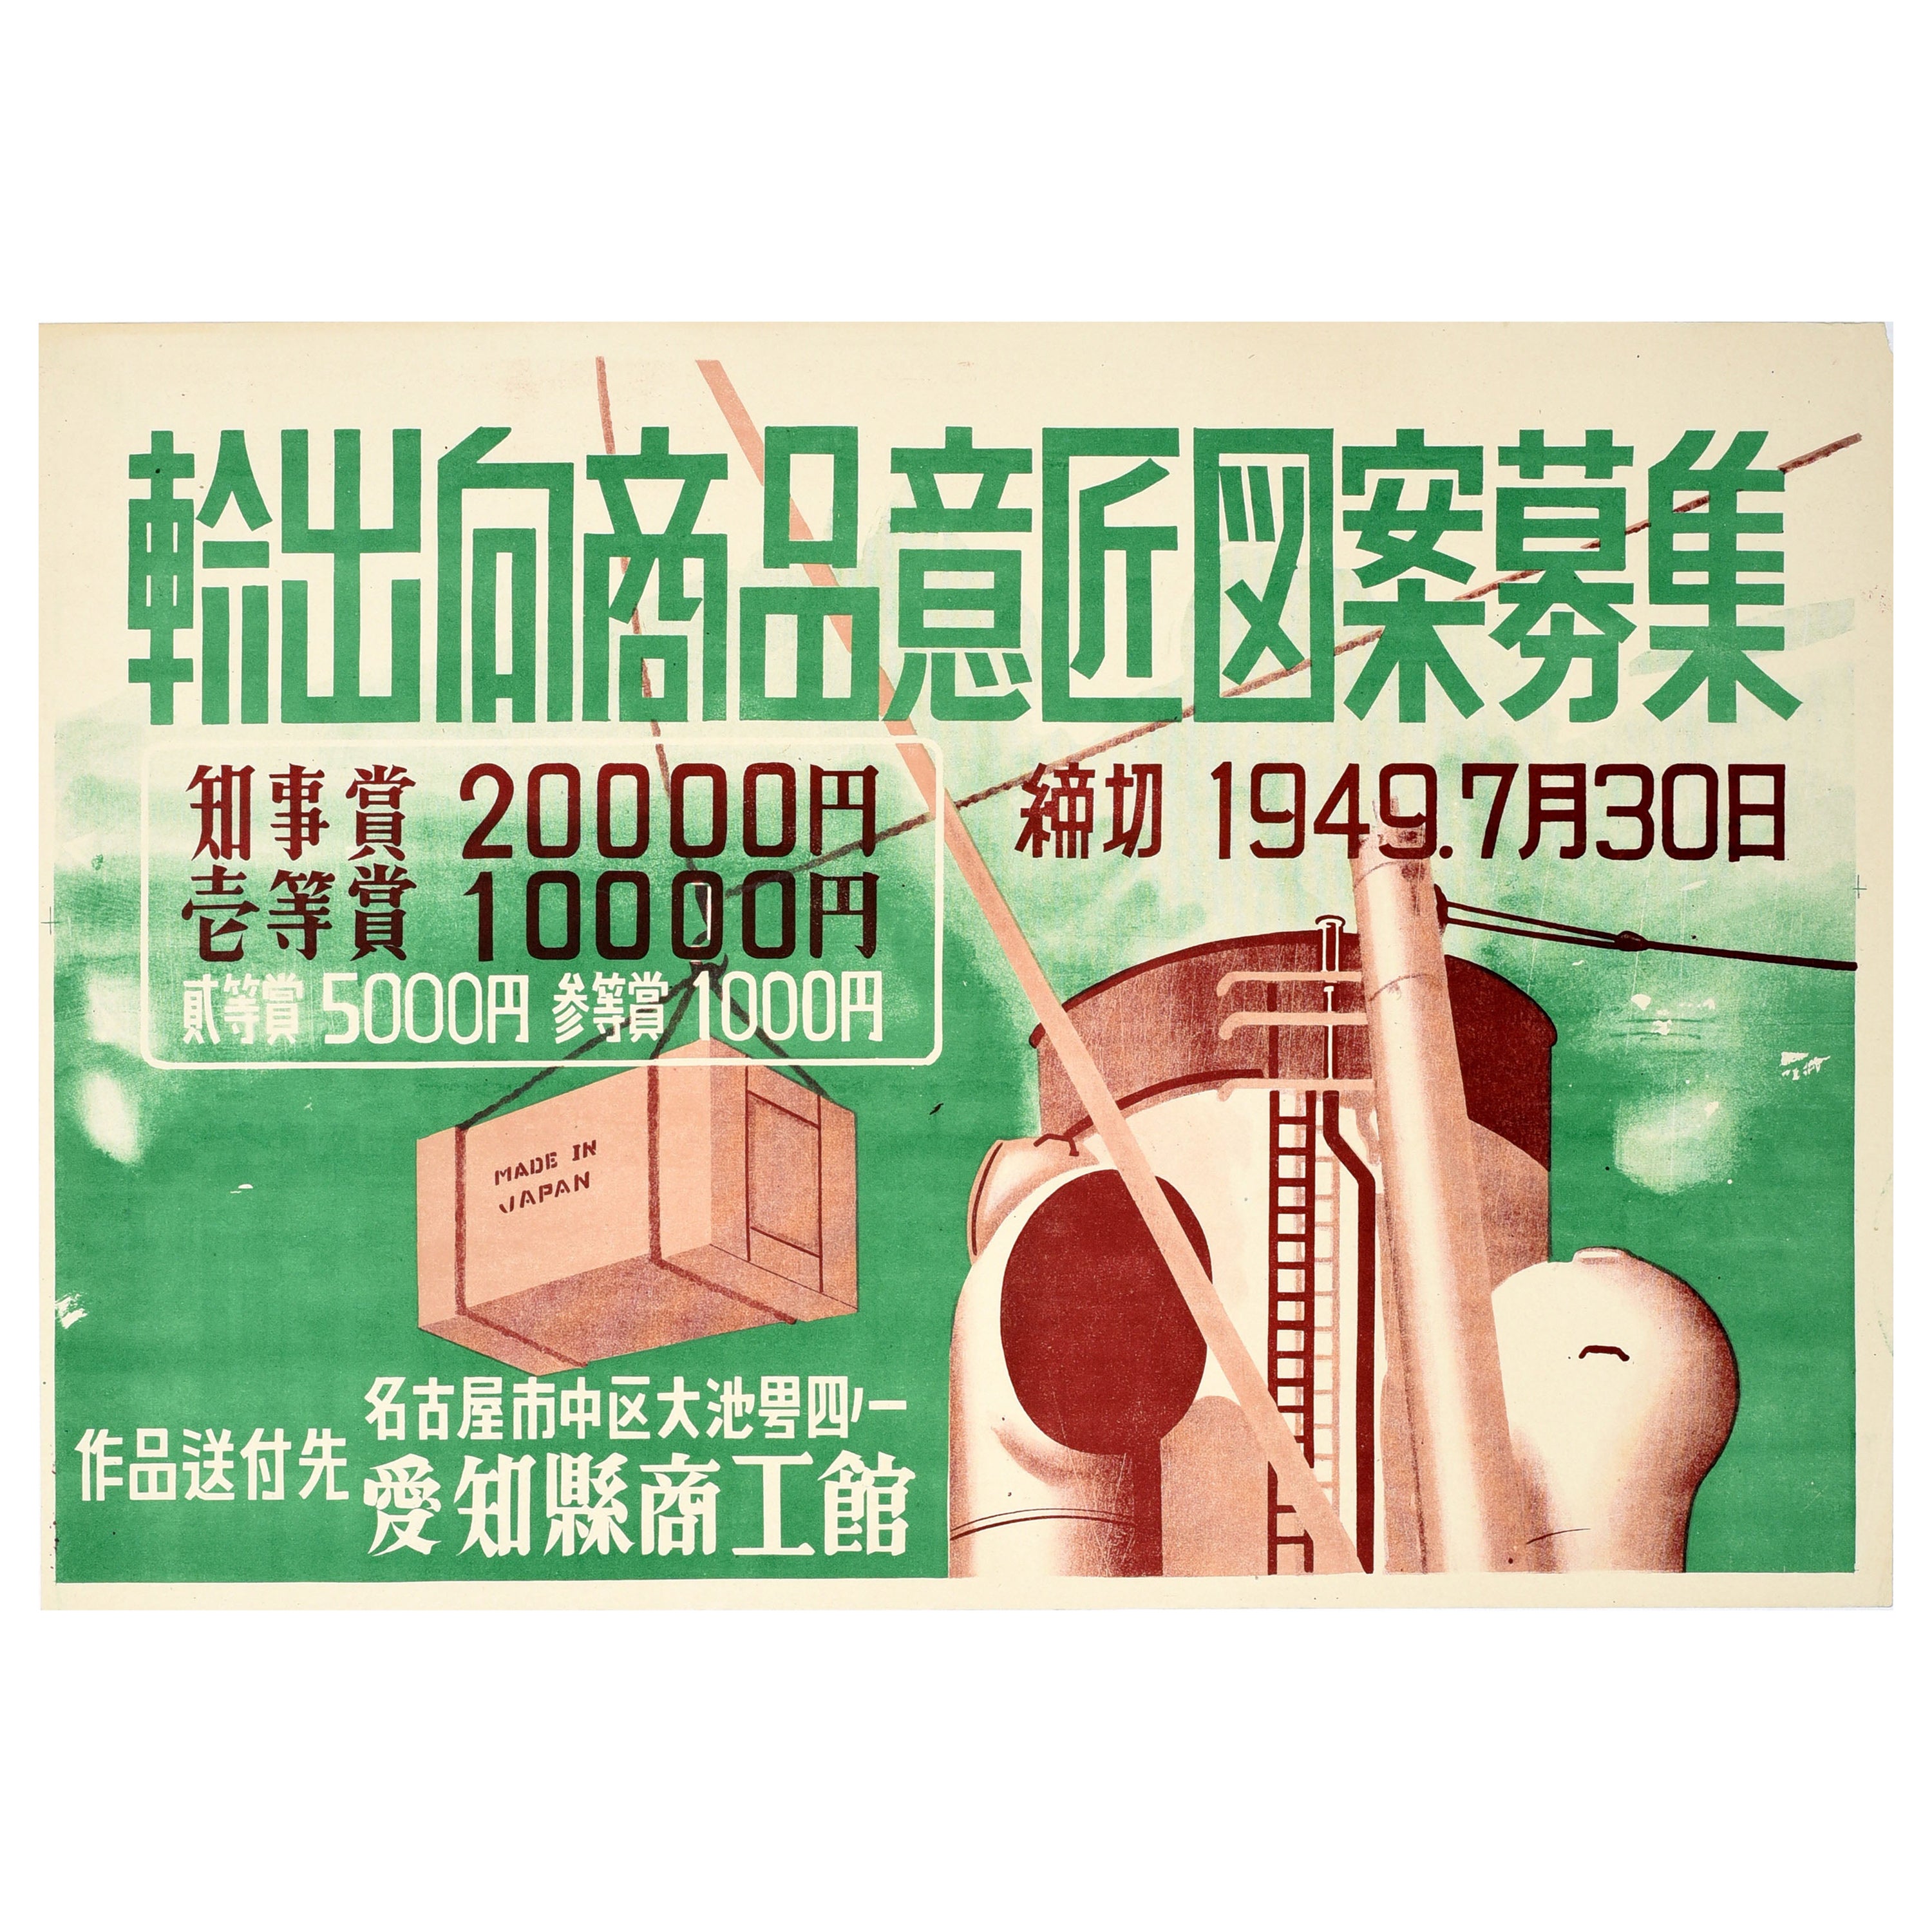 Original Vintage Recruitment Poster Product Design Japan Foreign Export Industry